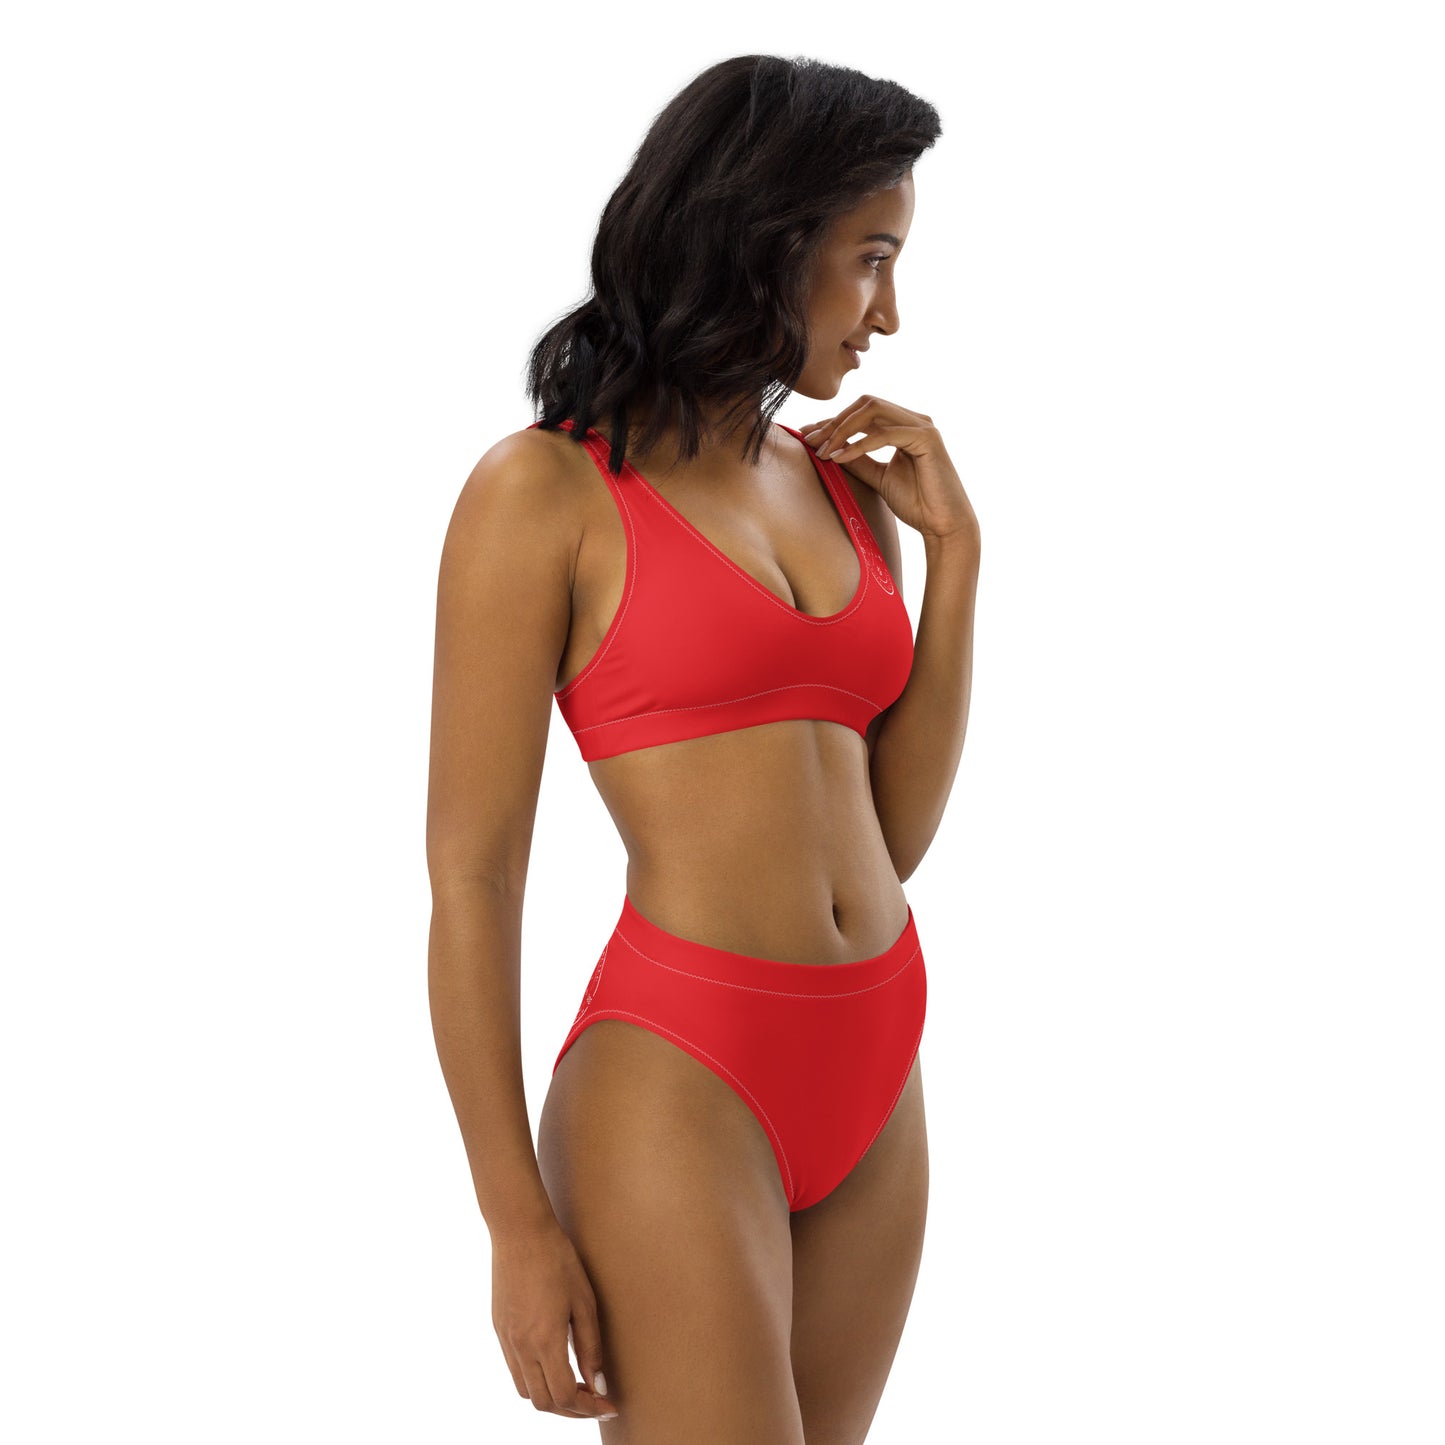 Oceanic Elegance: Gills and Water Red high-waisted bikini